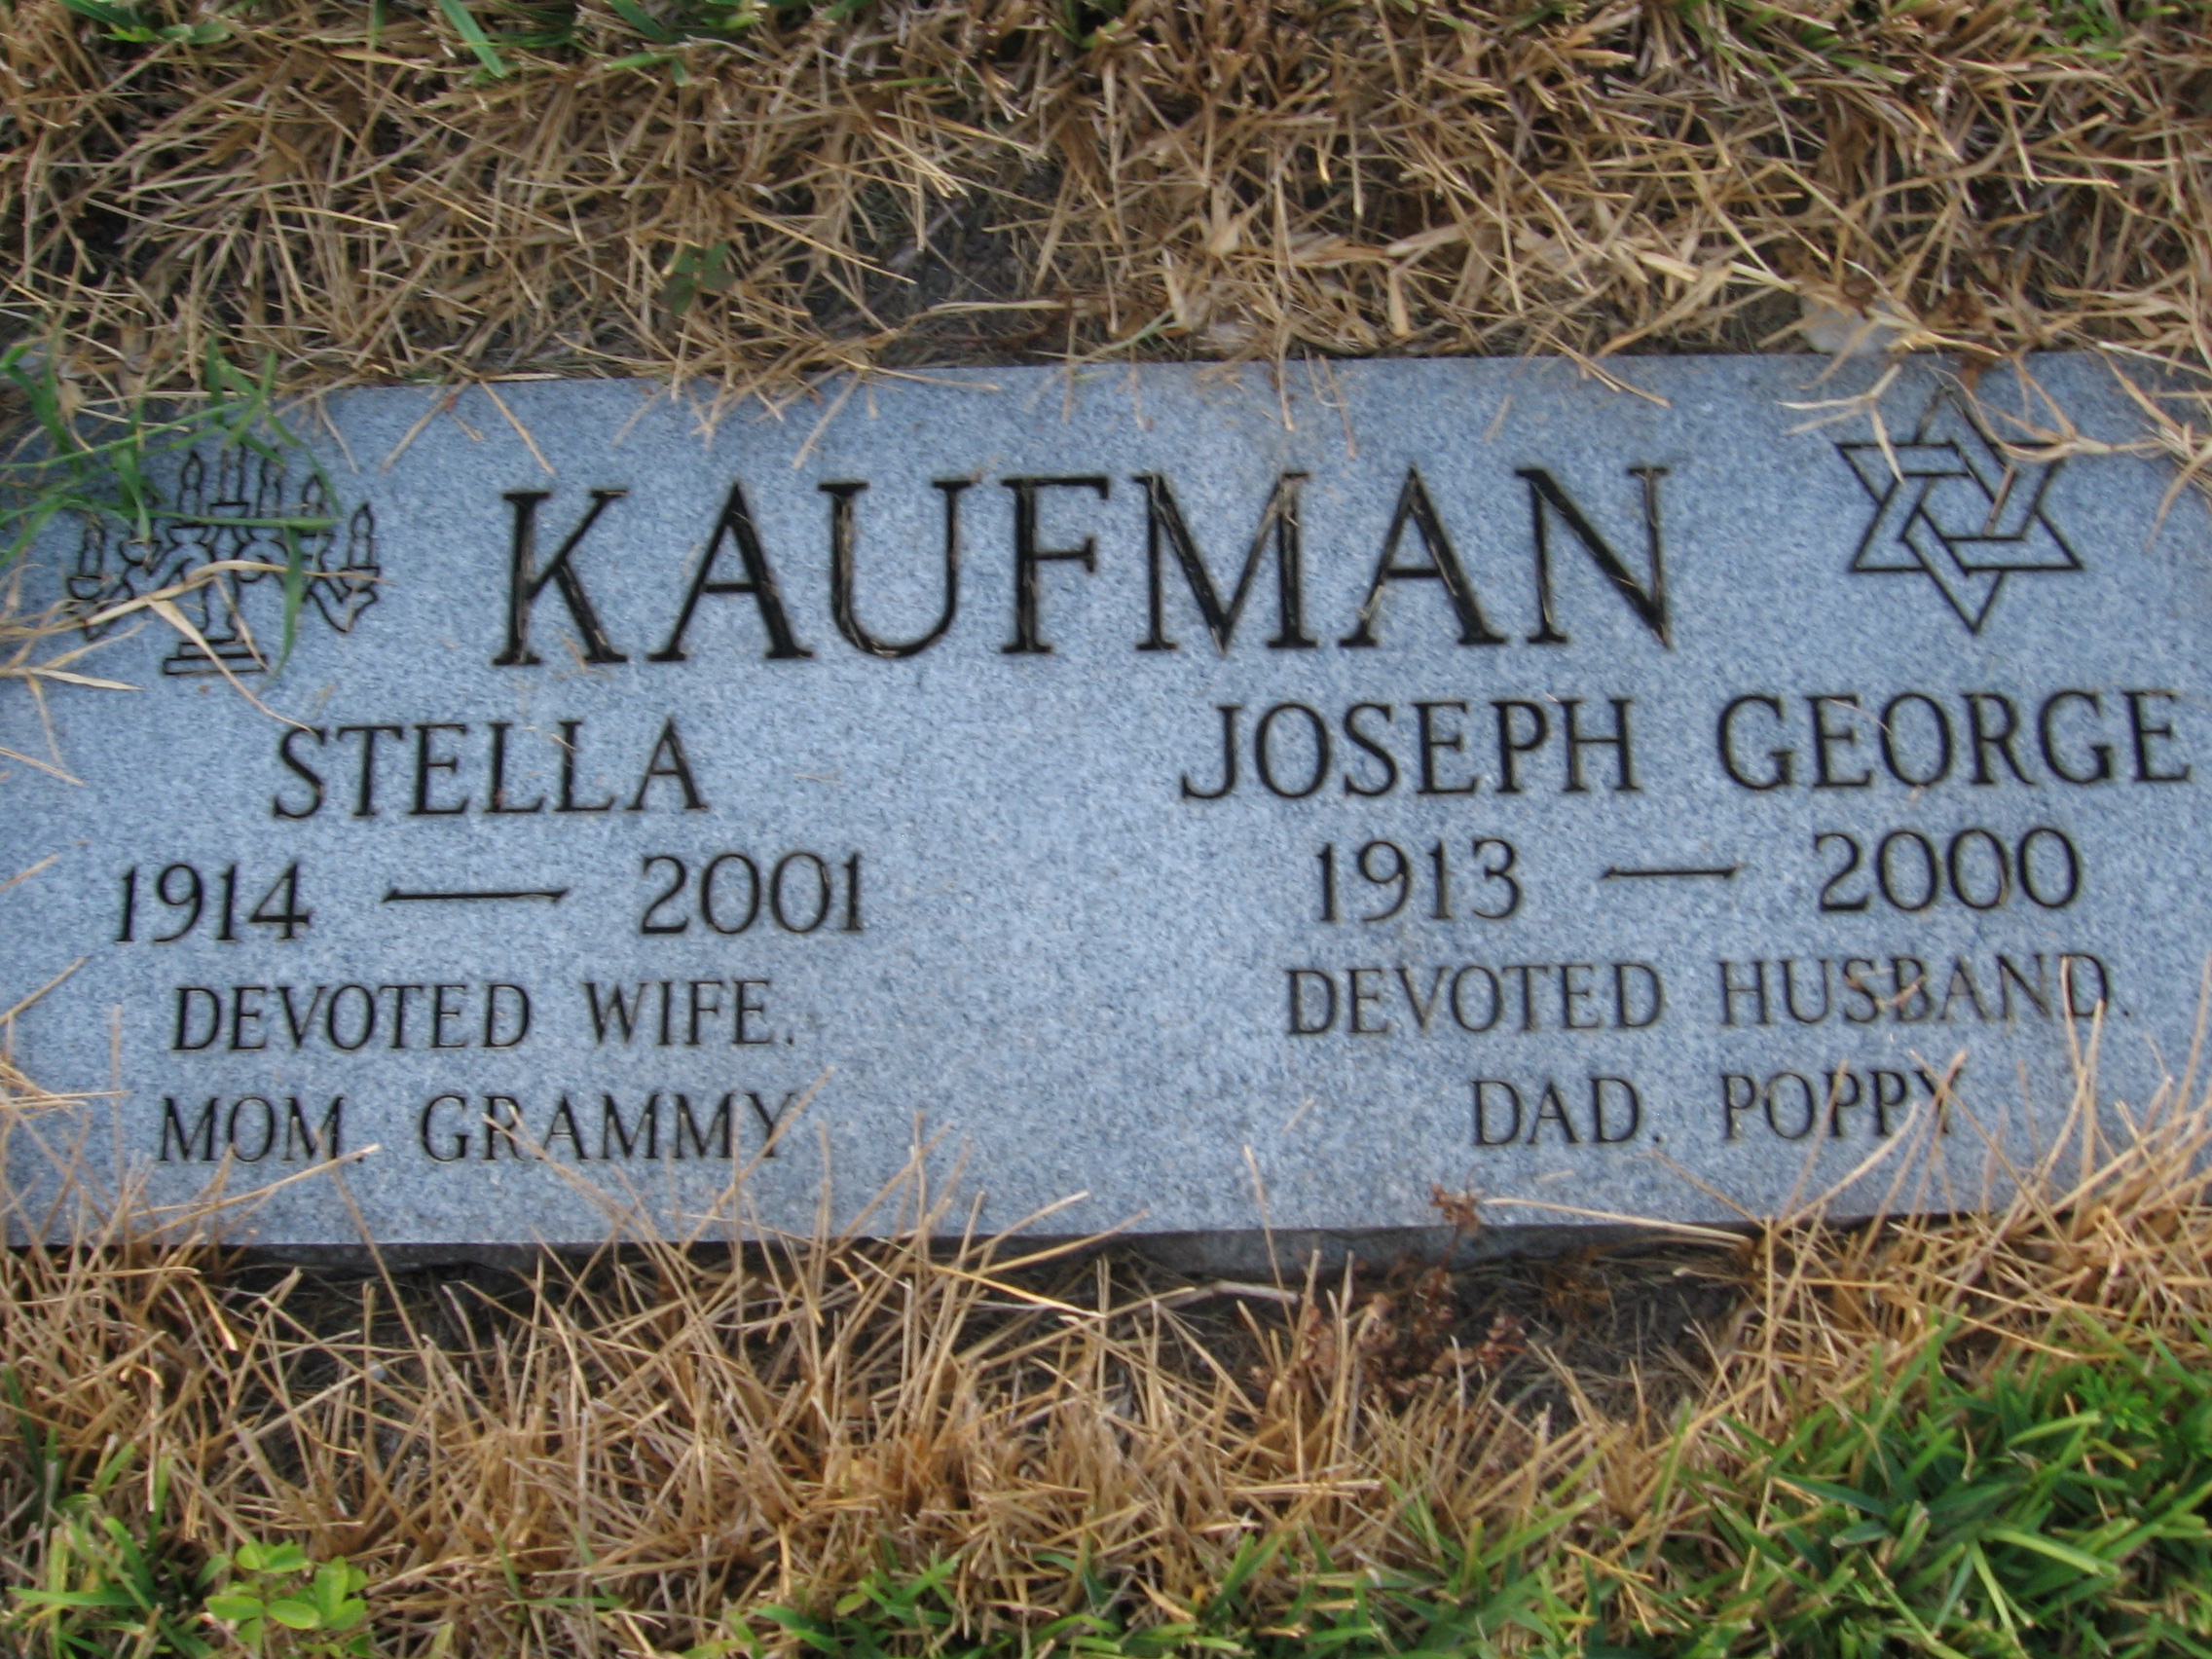 Joseph George Kaufman